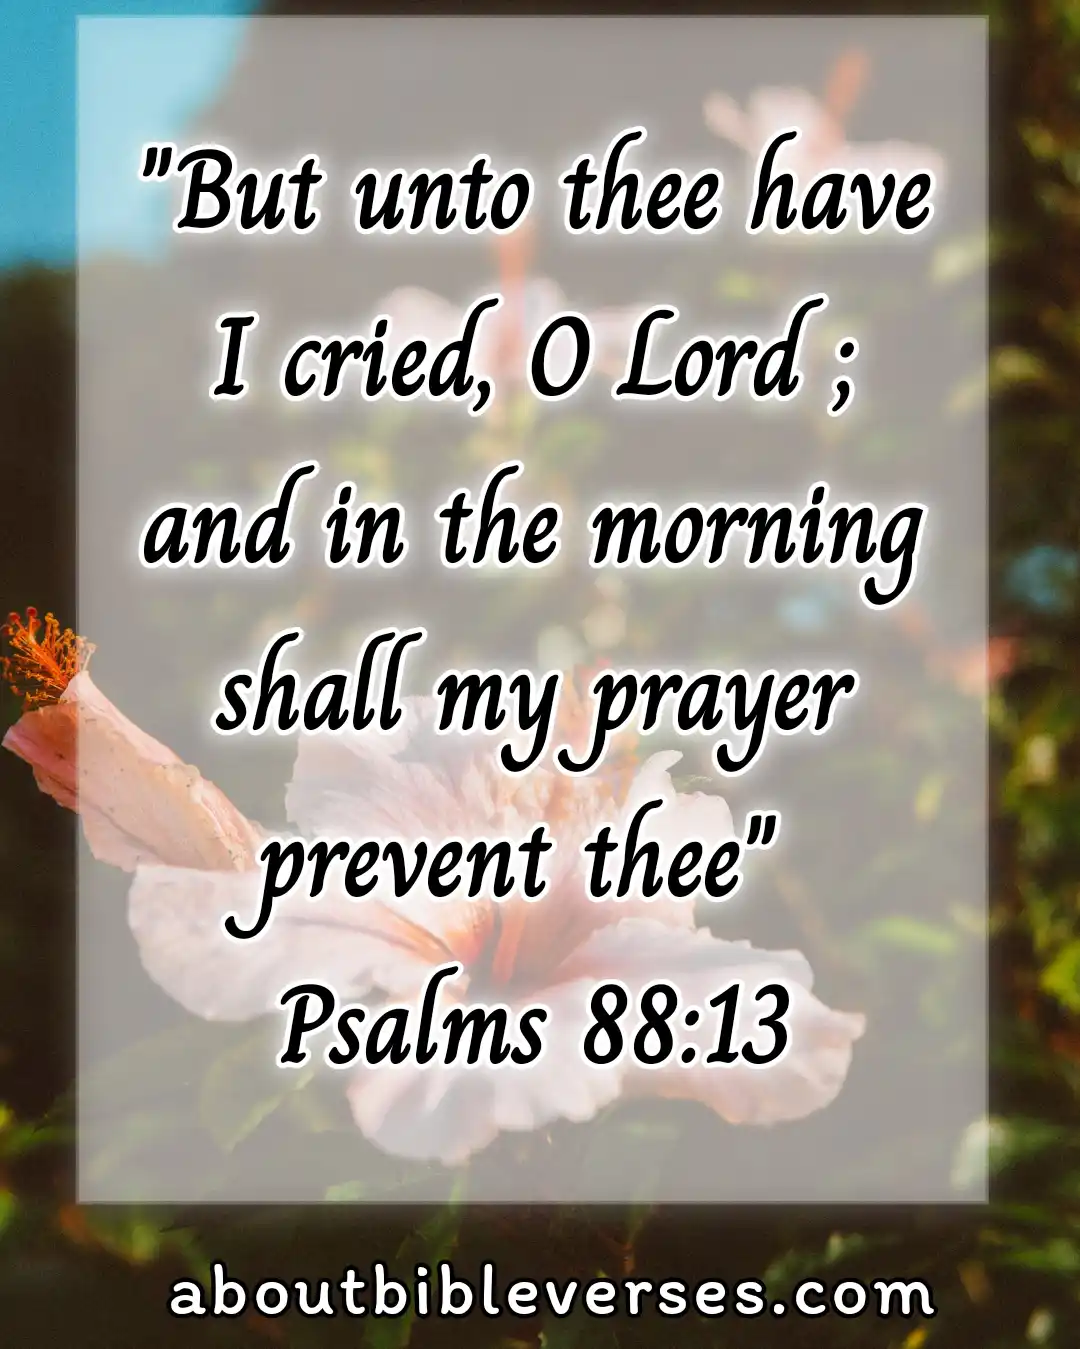 Good morning bible verses (Psalm 88:13)